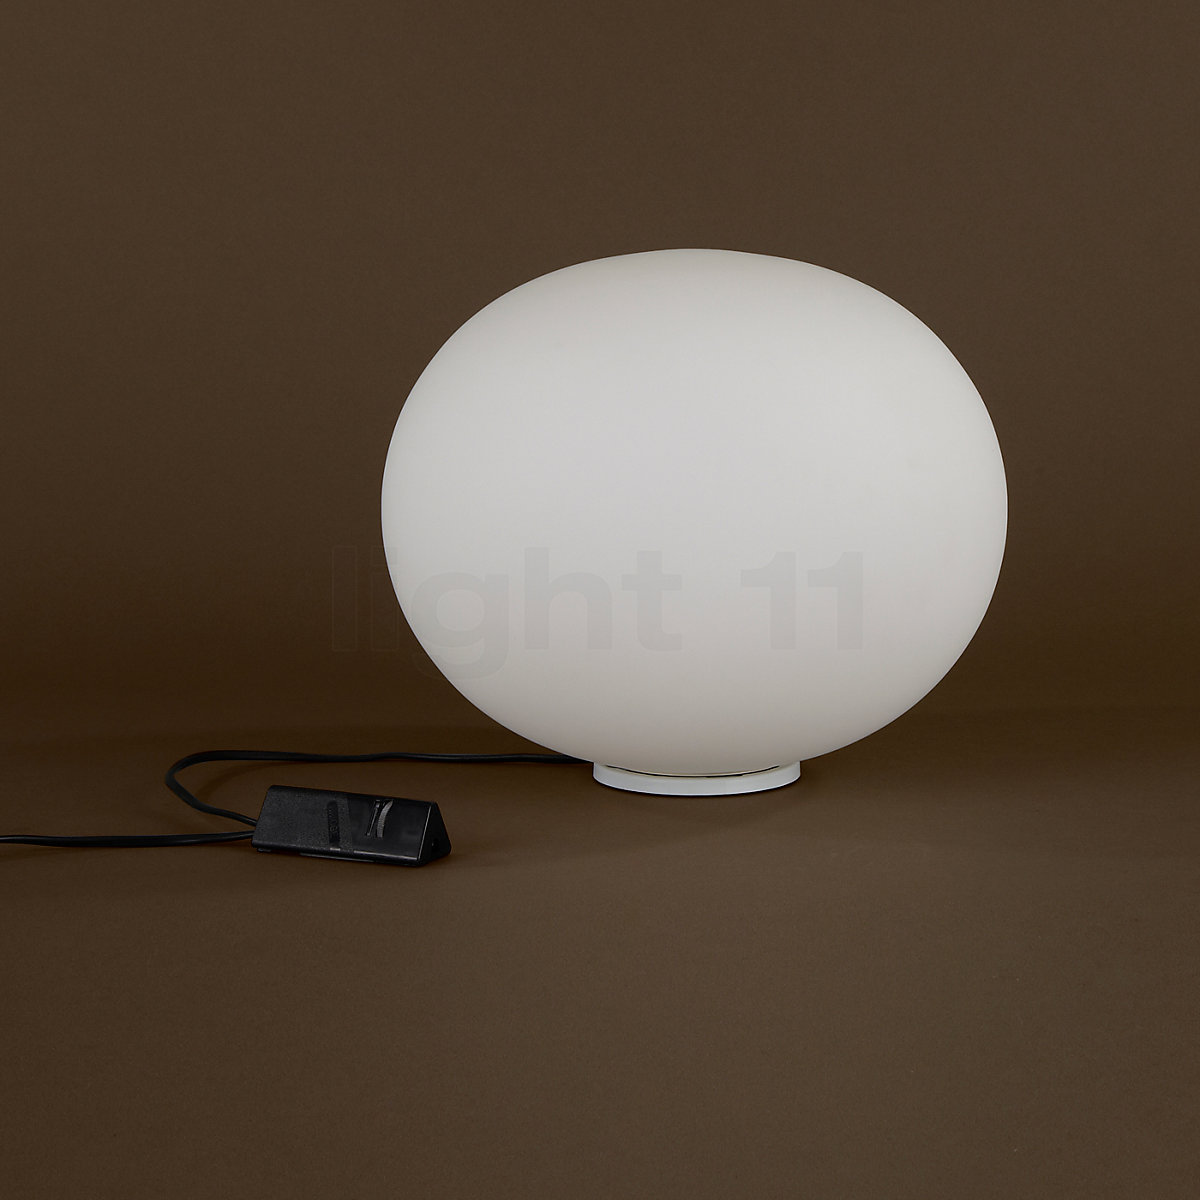 Buy Glo-Ball Table Lamp at light11.eu